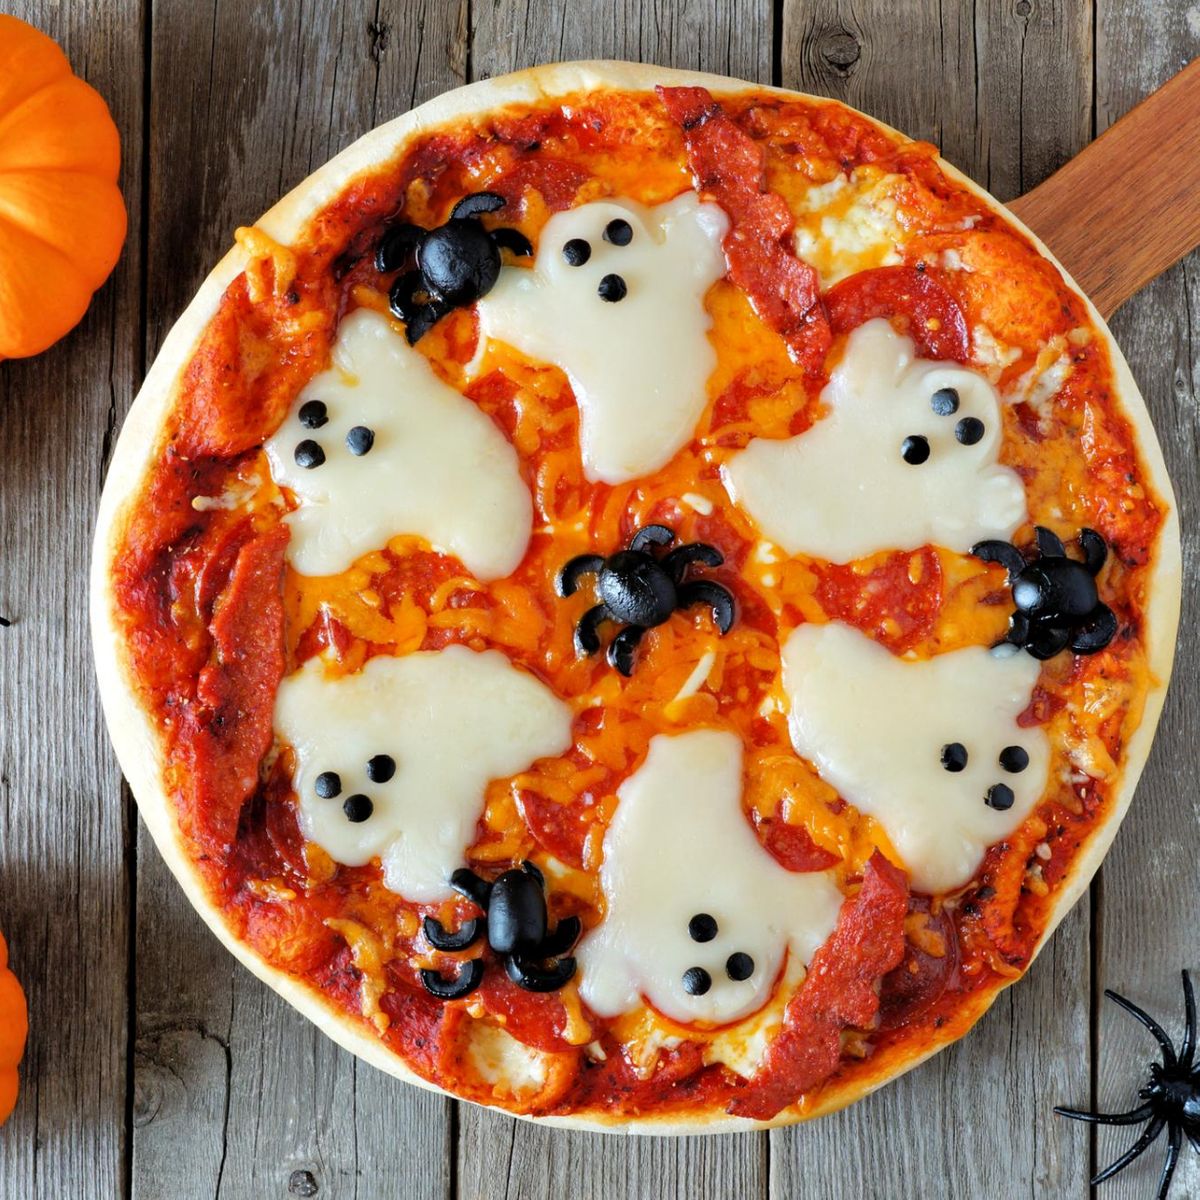 Halloween-Kracher: Diese Gespenster-Pizza haut alle um